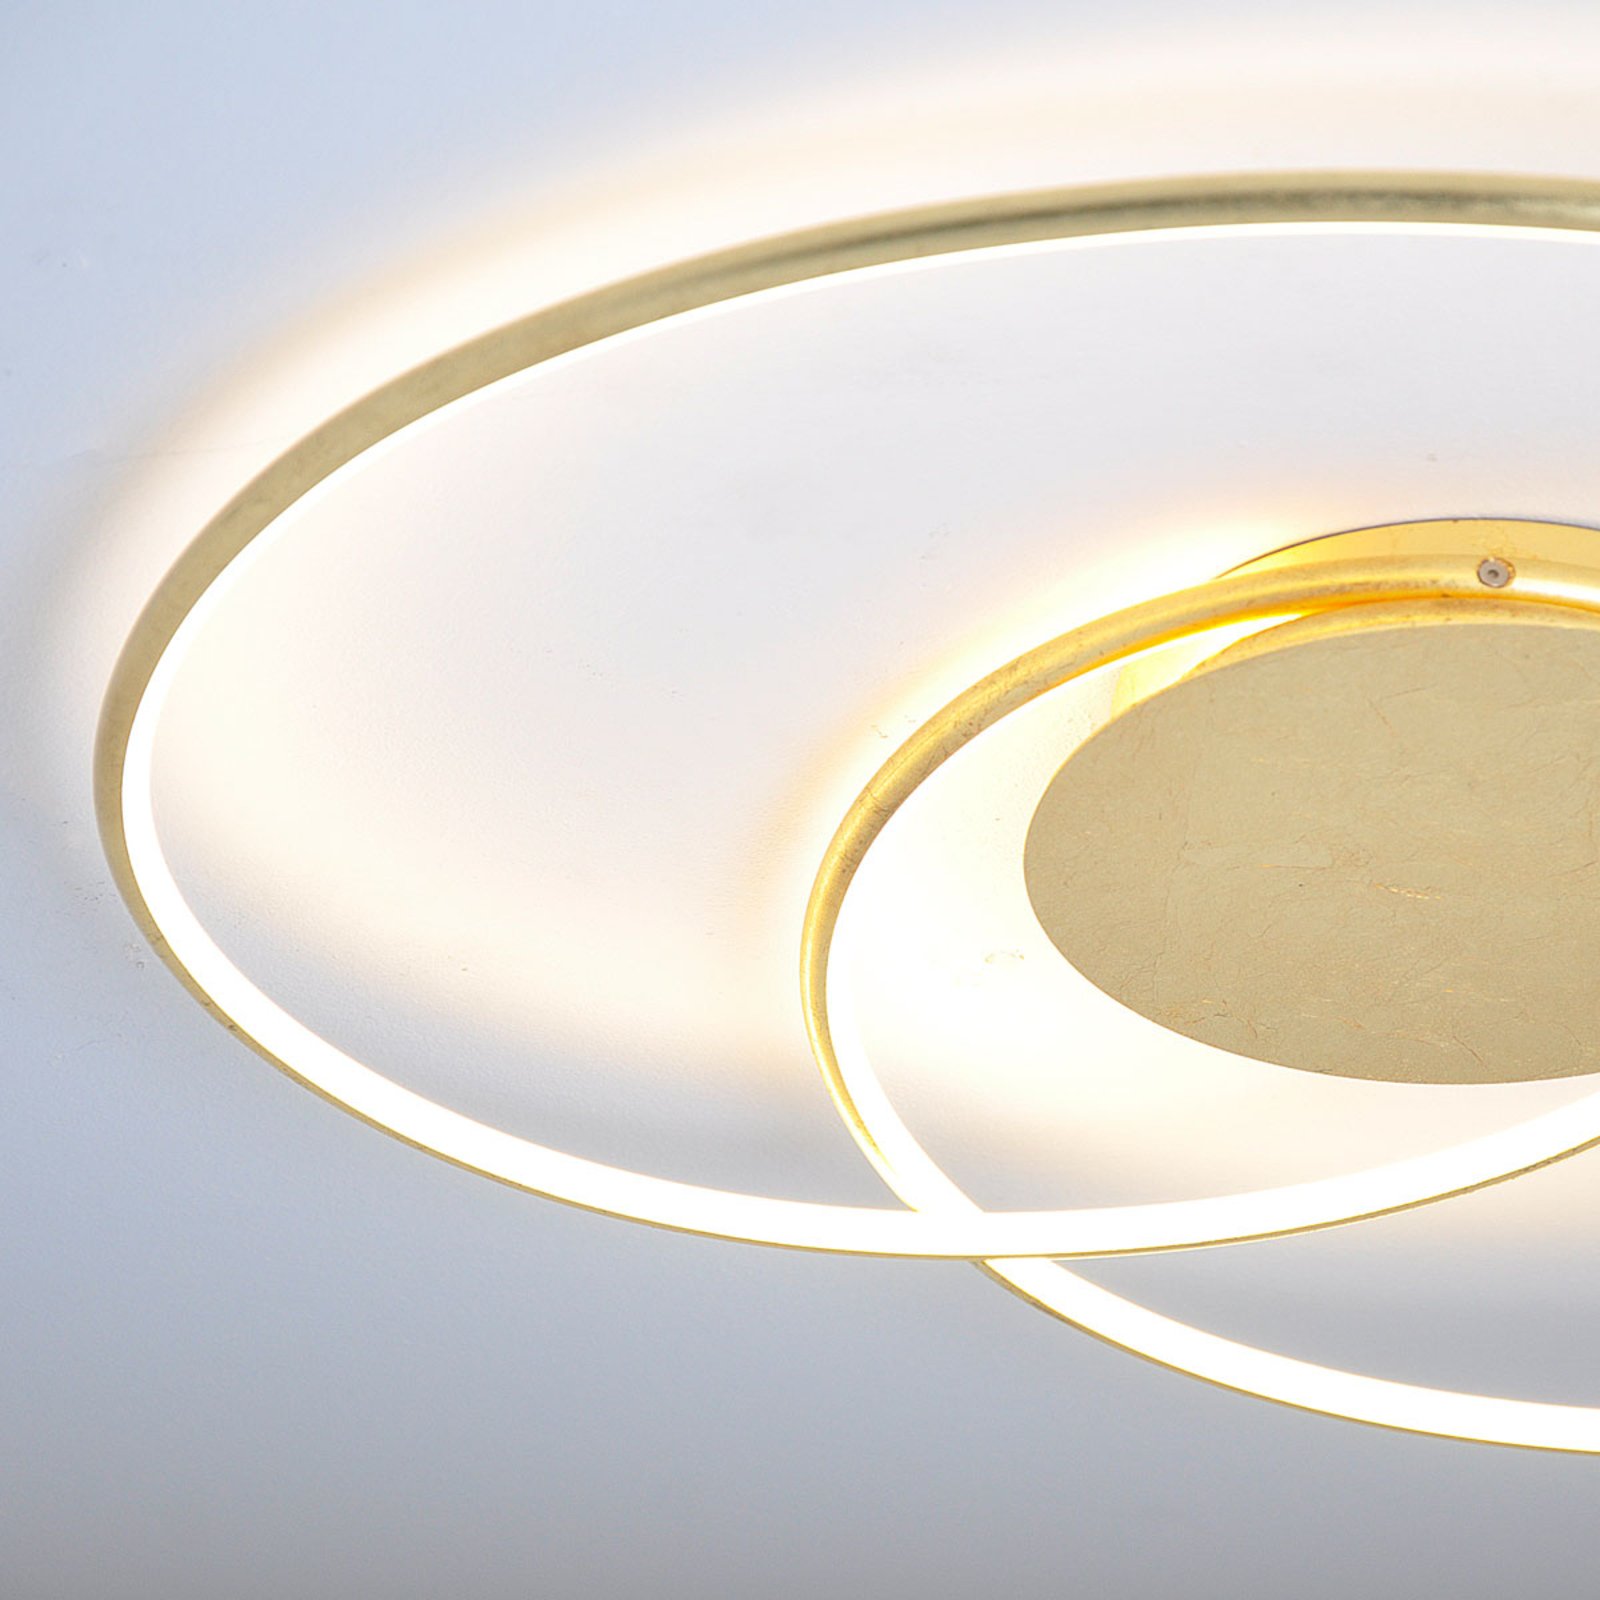 LED-Deckenlampe Joline, gold, 74 cm